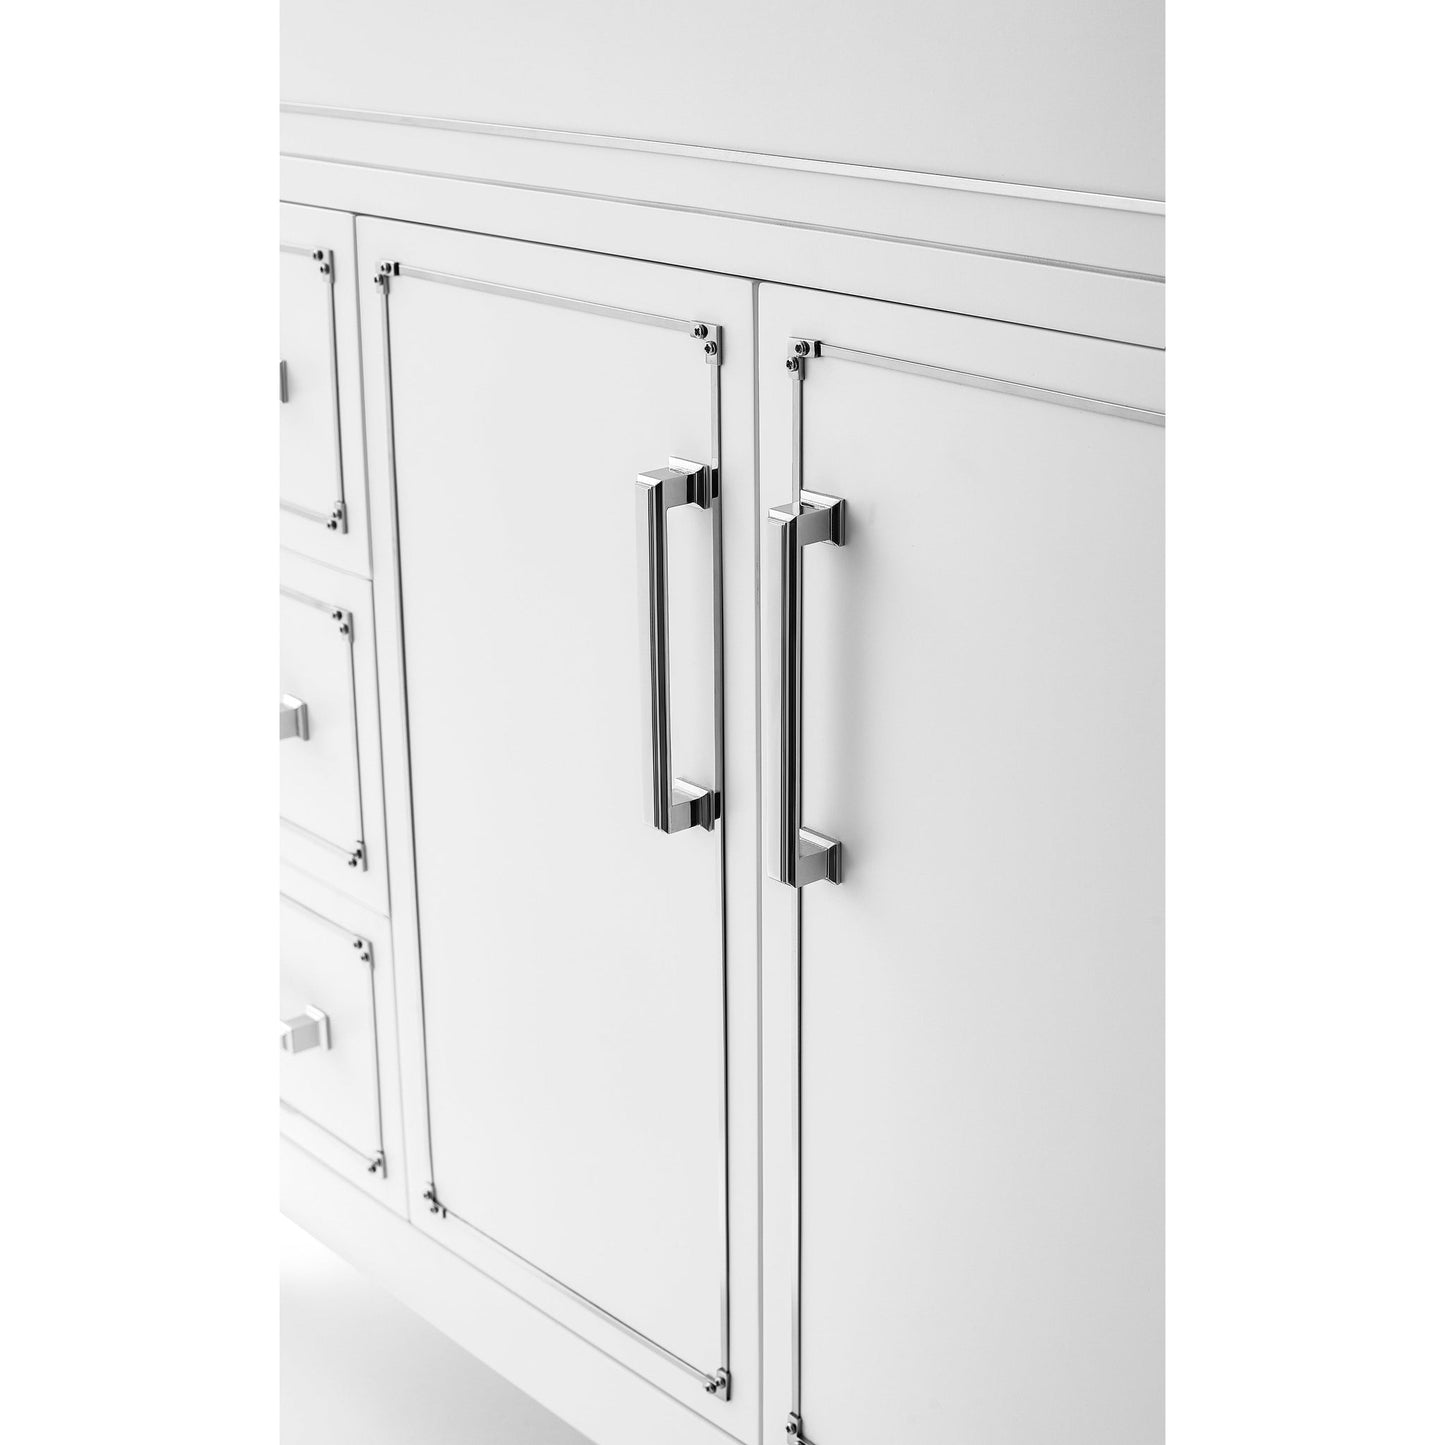 Ancerre Designs Aspen 36" White 2-Door 3-Drawer Bathroom Vanity With White Marble Vanity Top, Single Undermount Ceramic Sink, 4" Solid Wood Backsplash and Chrome Hardware